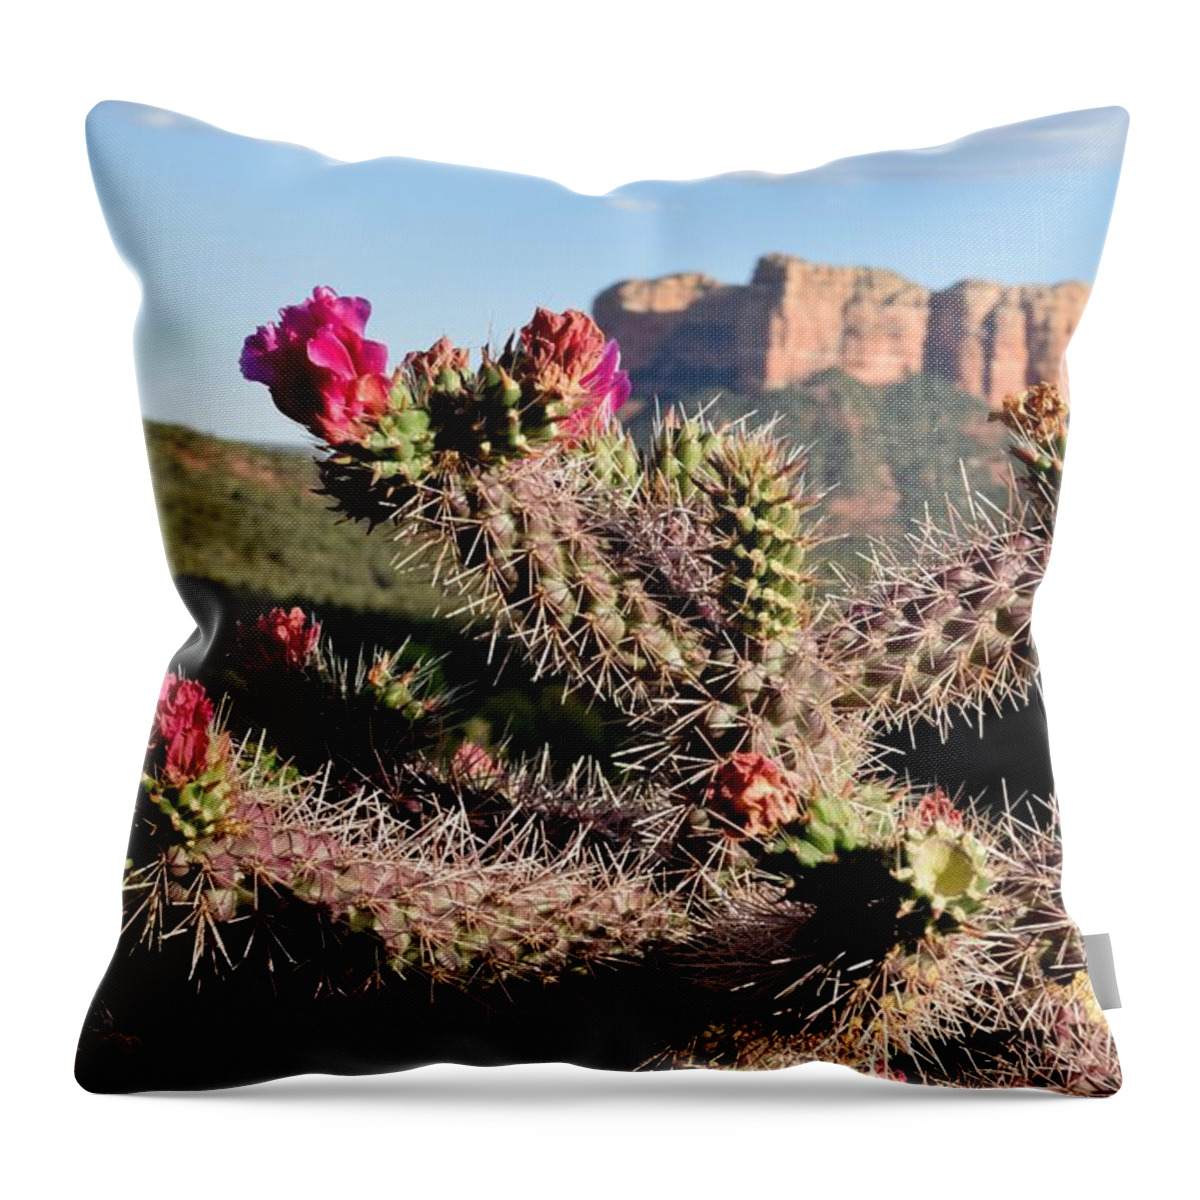 Sedona Throw Pillow featuring the photograph Desert in bloom by Jim Bennight